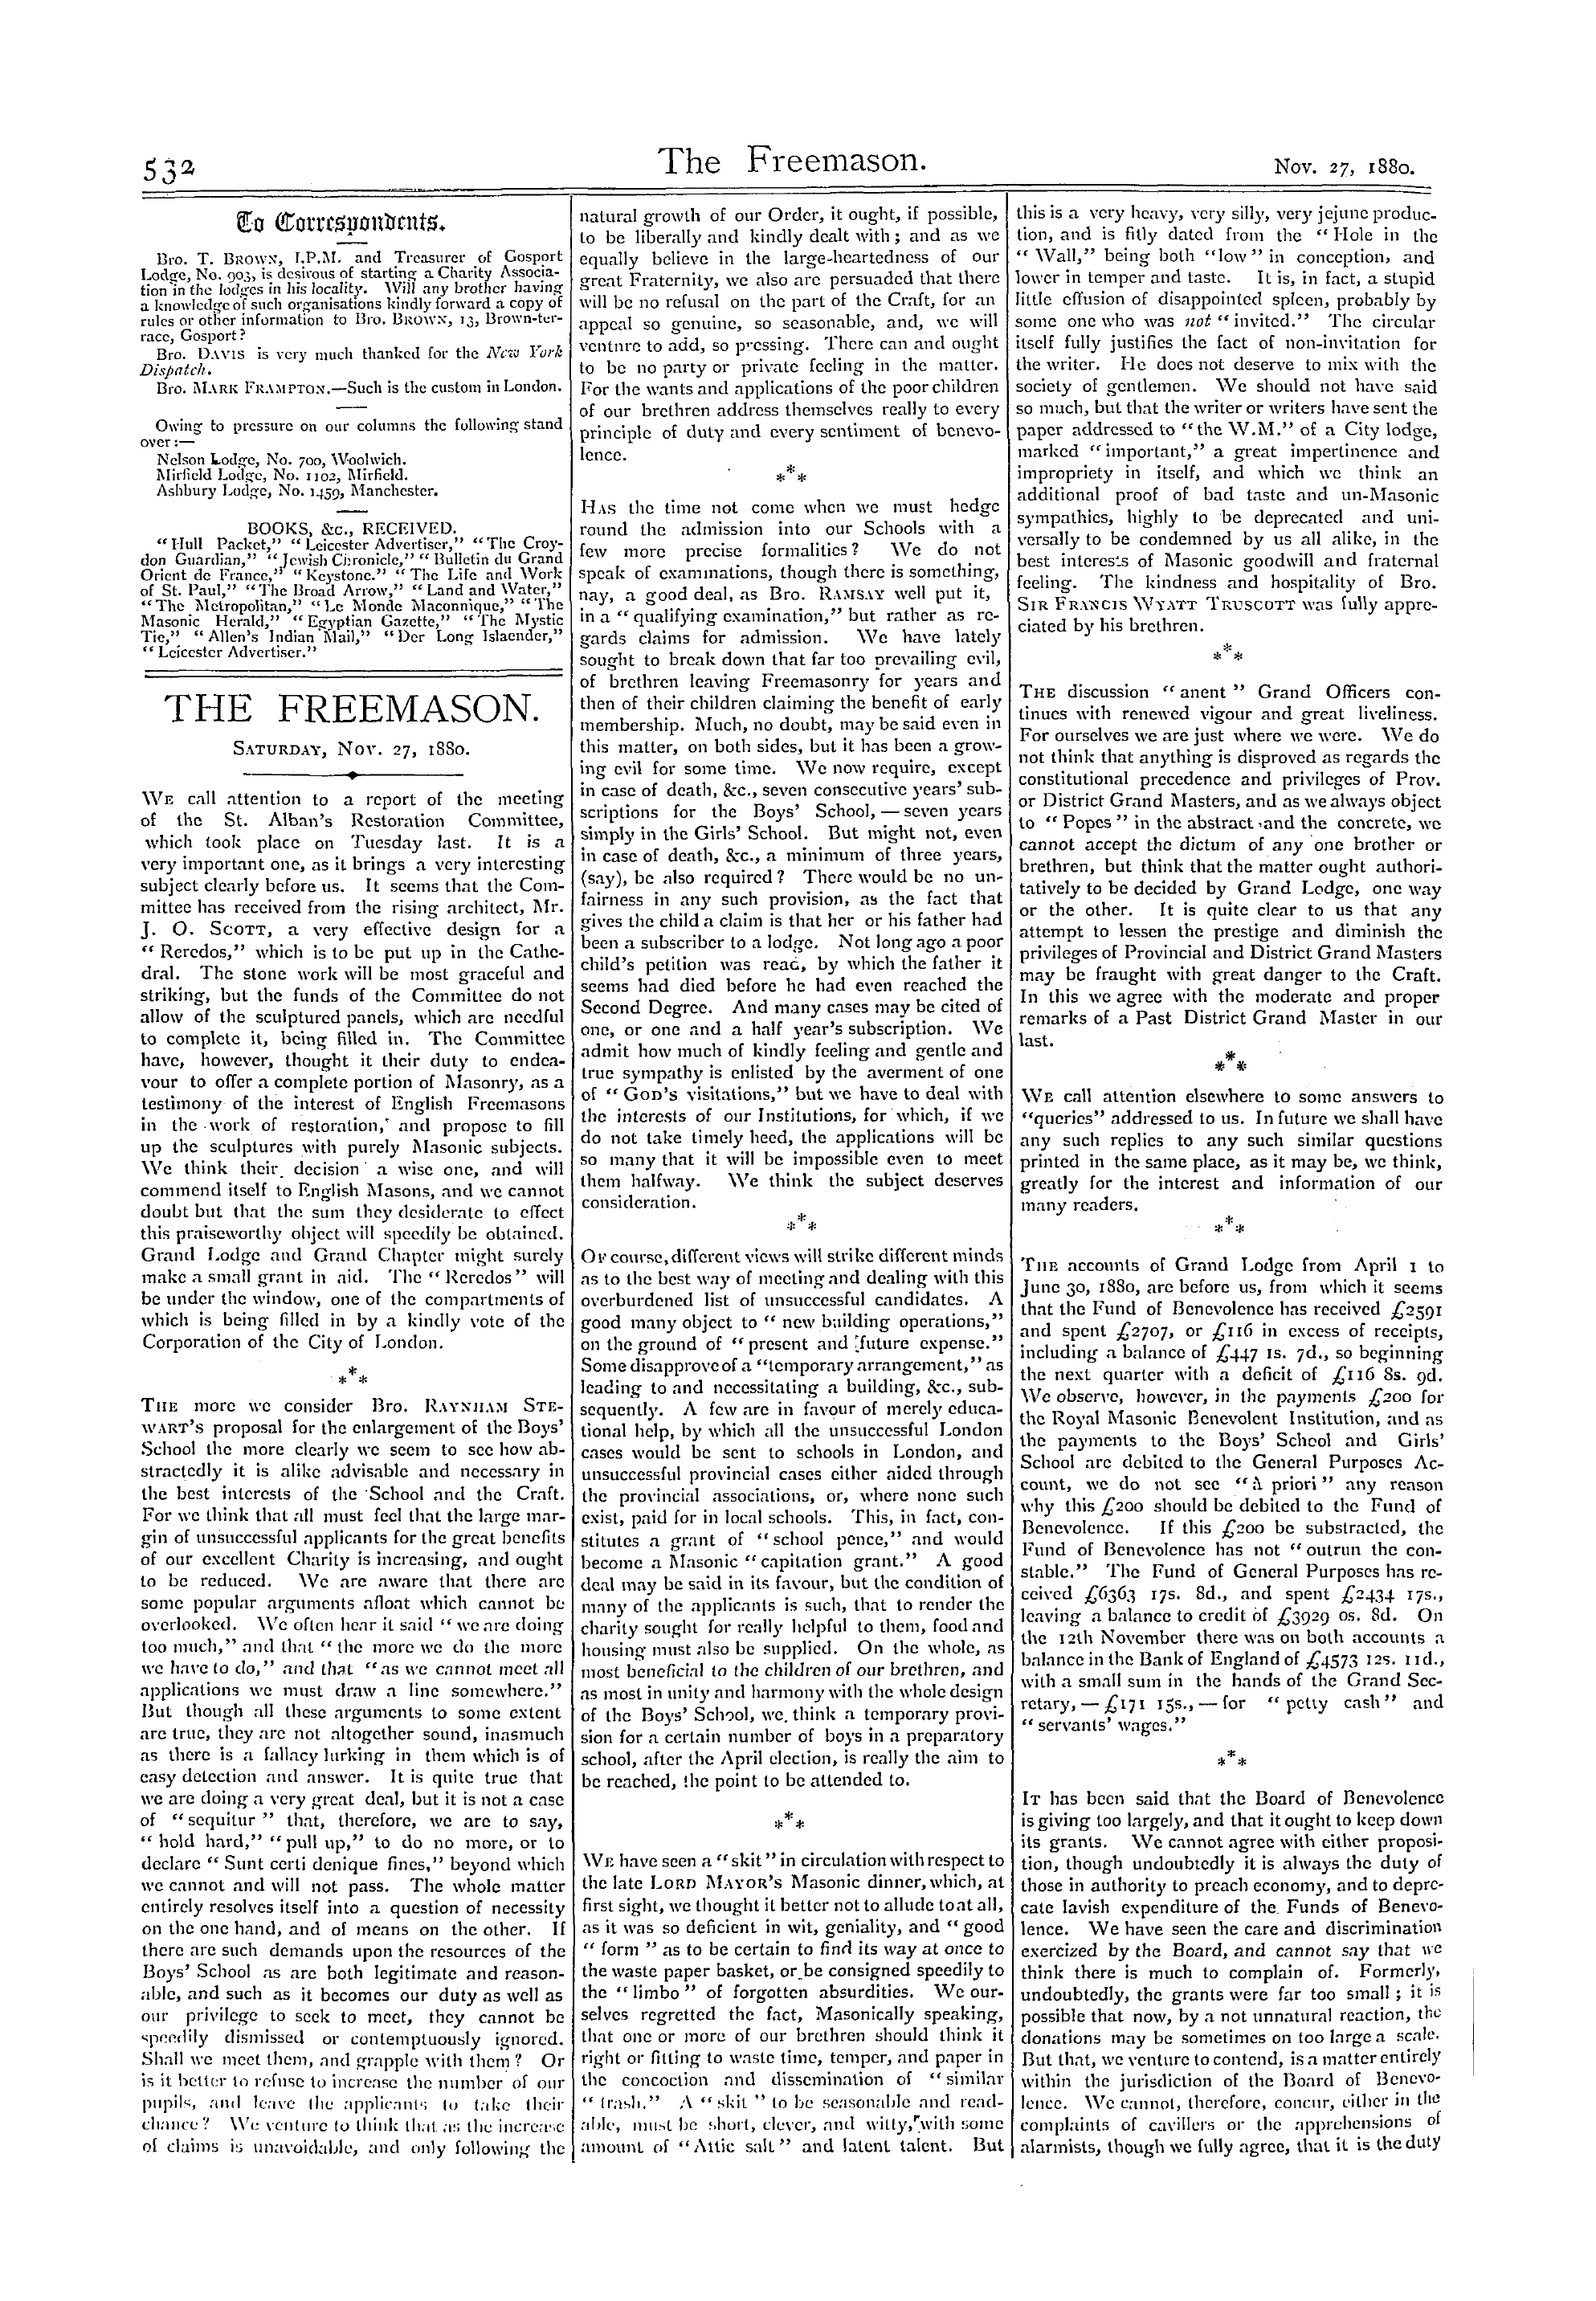 The Freemason: 1880-11-27: 8